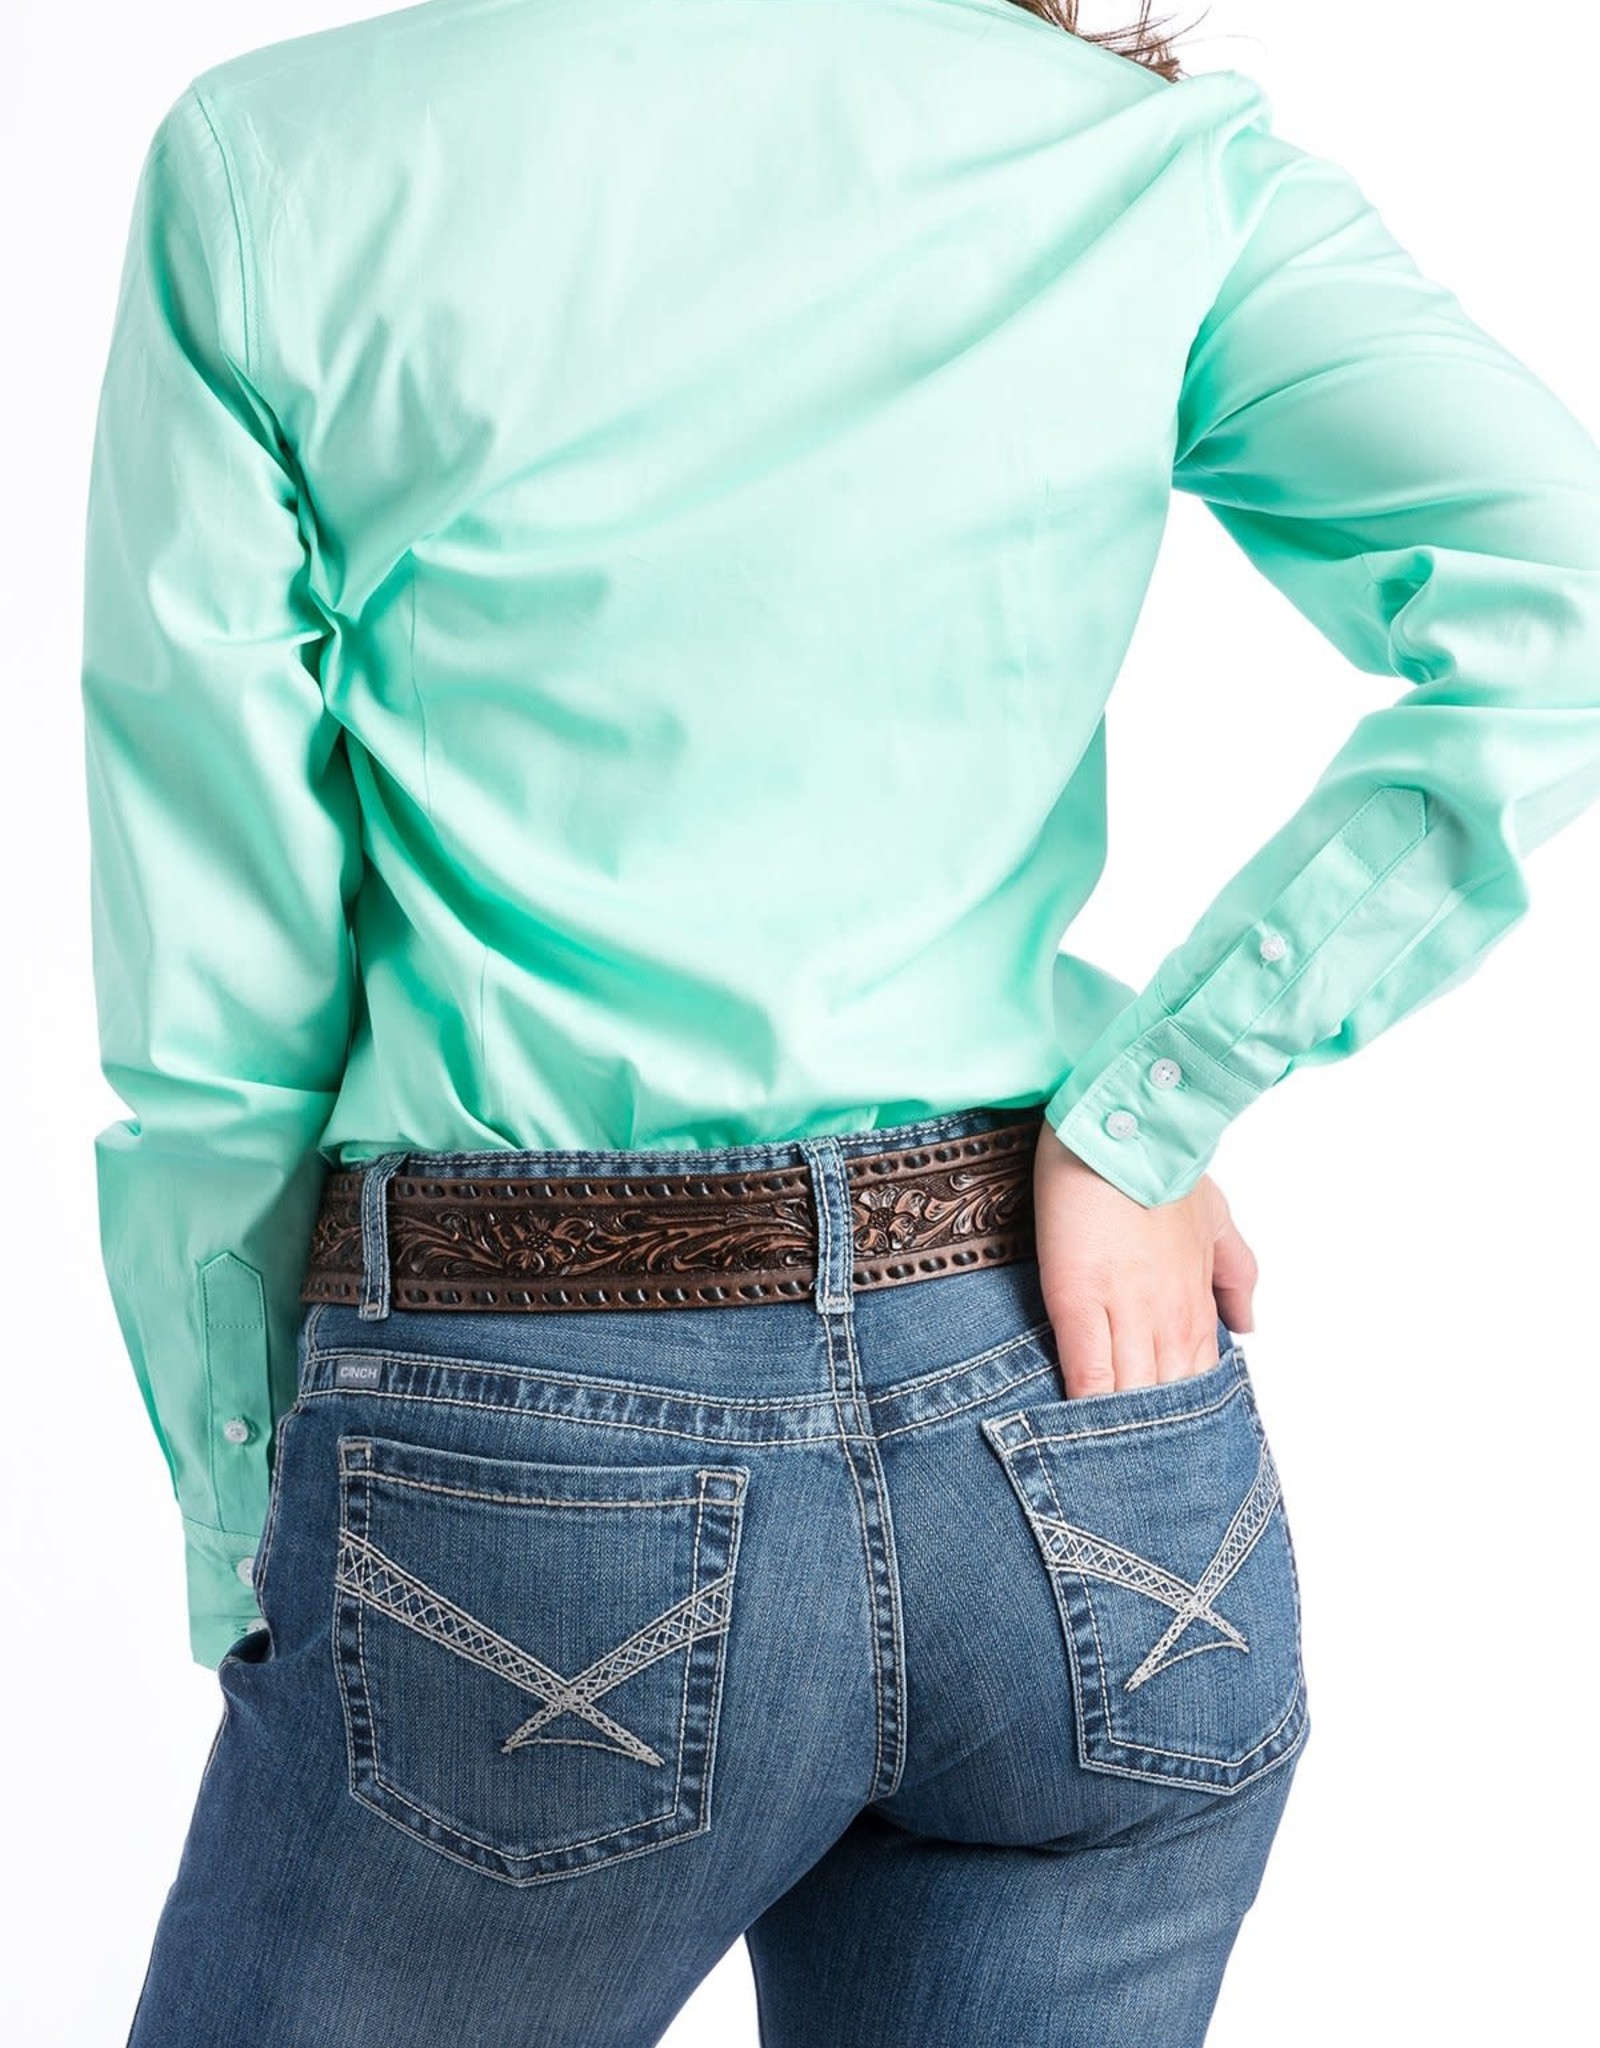 Cinch Womens Cinch Solid Mint Green Long Sleeve Button Down Western Arena Shirt